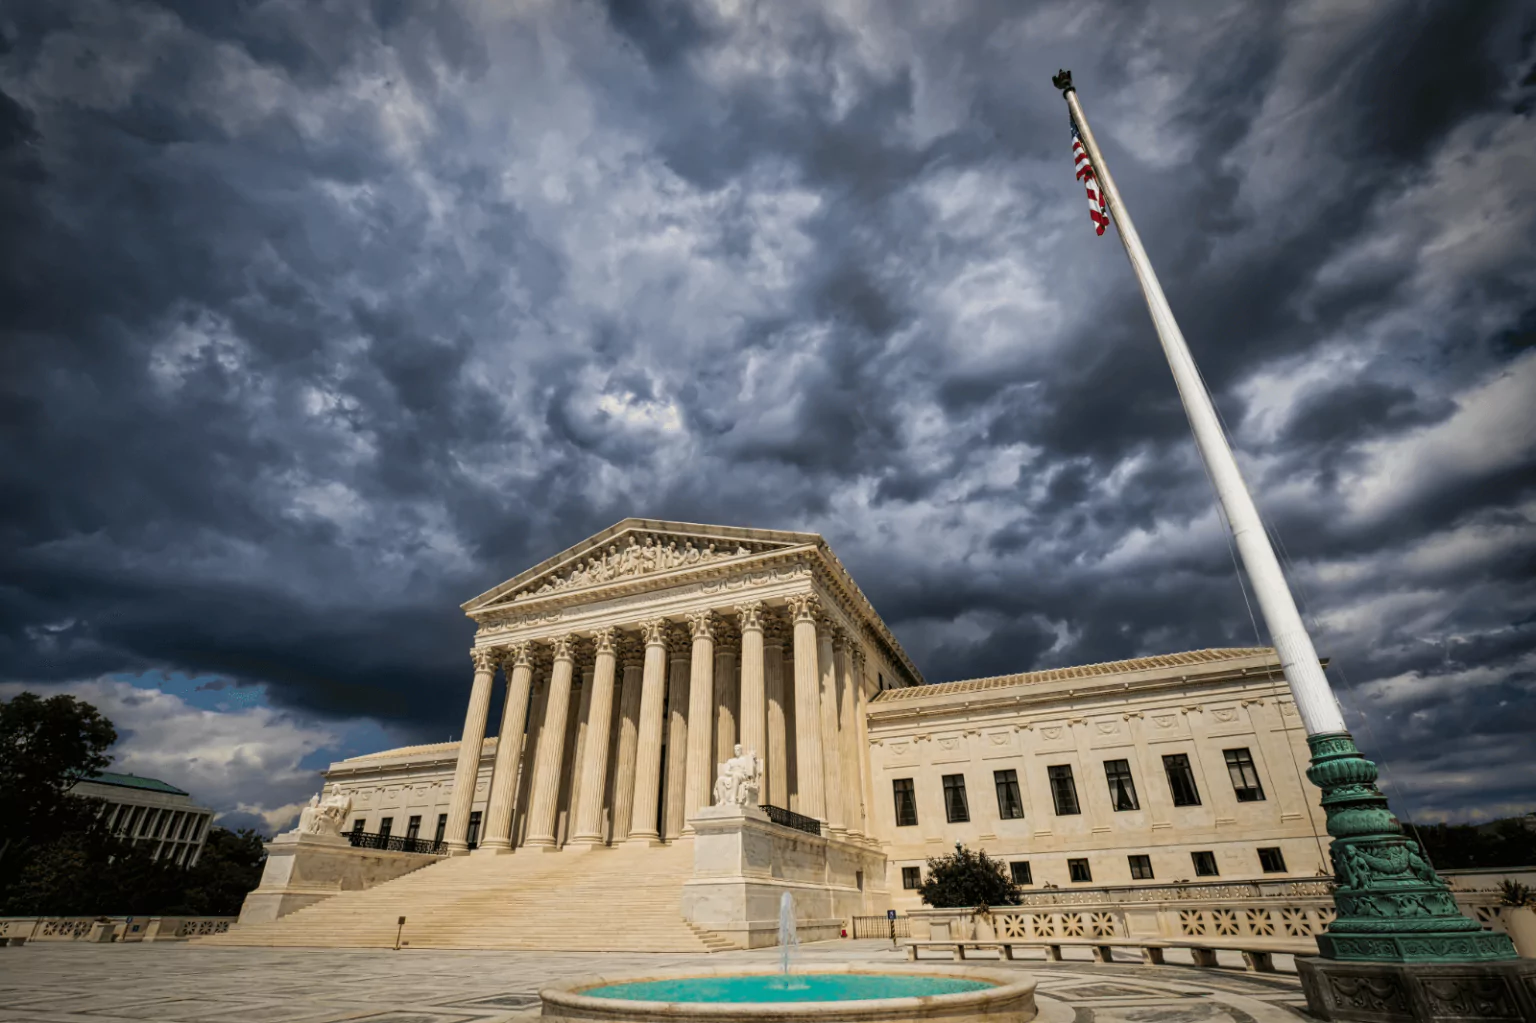 Supreme Court building with dark clouds, symbolizing a landmark decision.